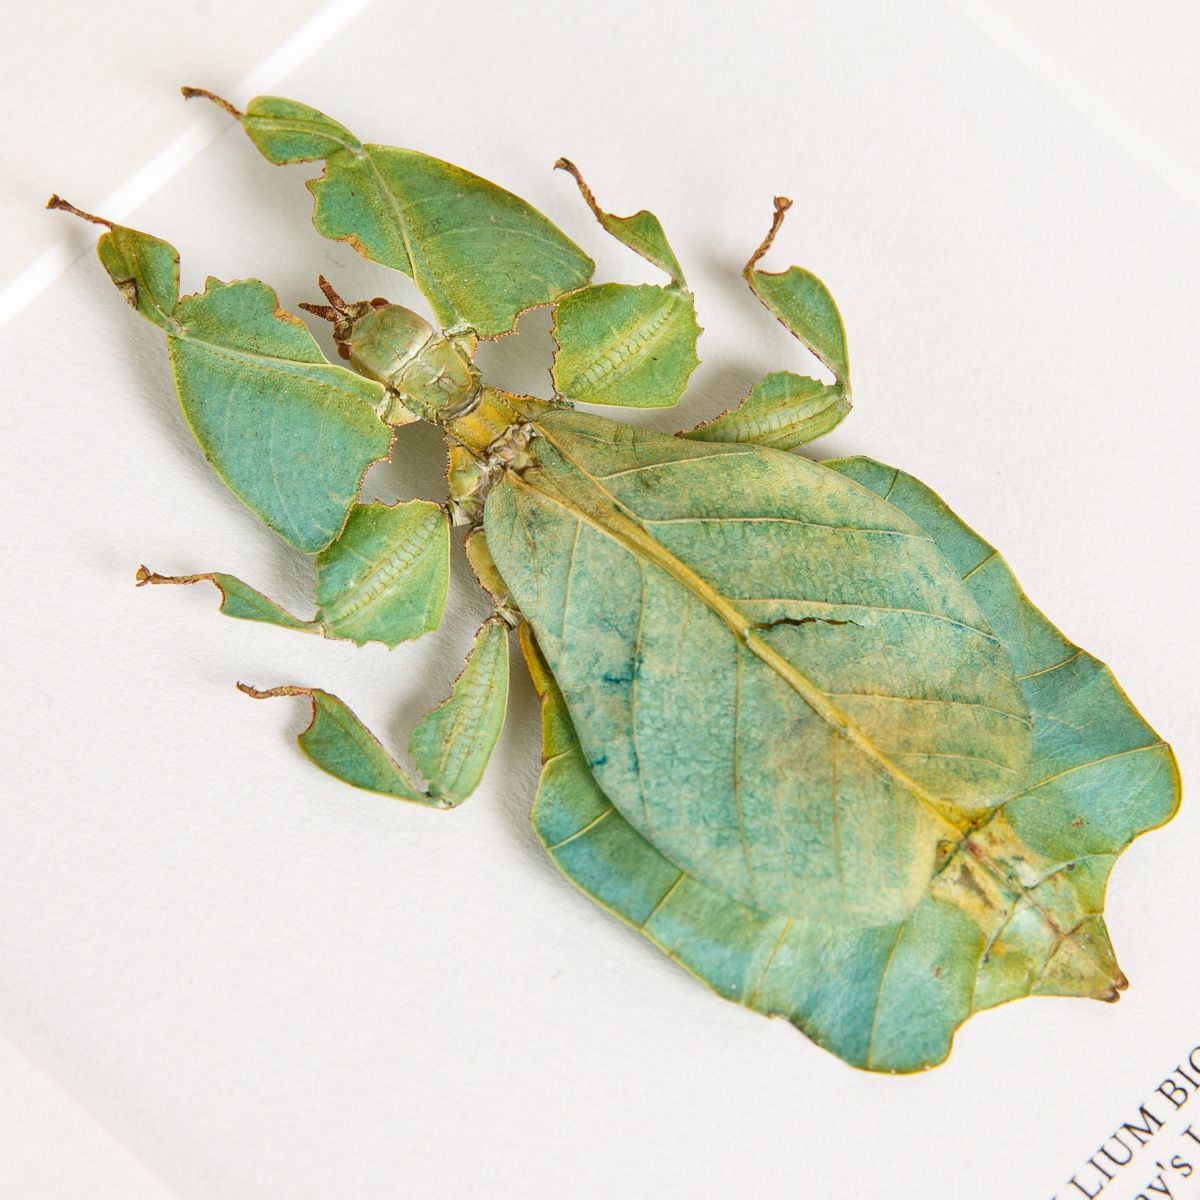 Gray's Leaf Insect in Box Frame (Phyllium bioculatum)